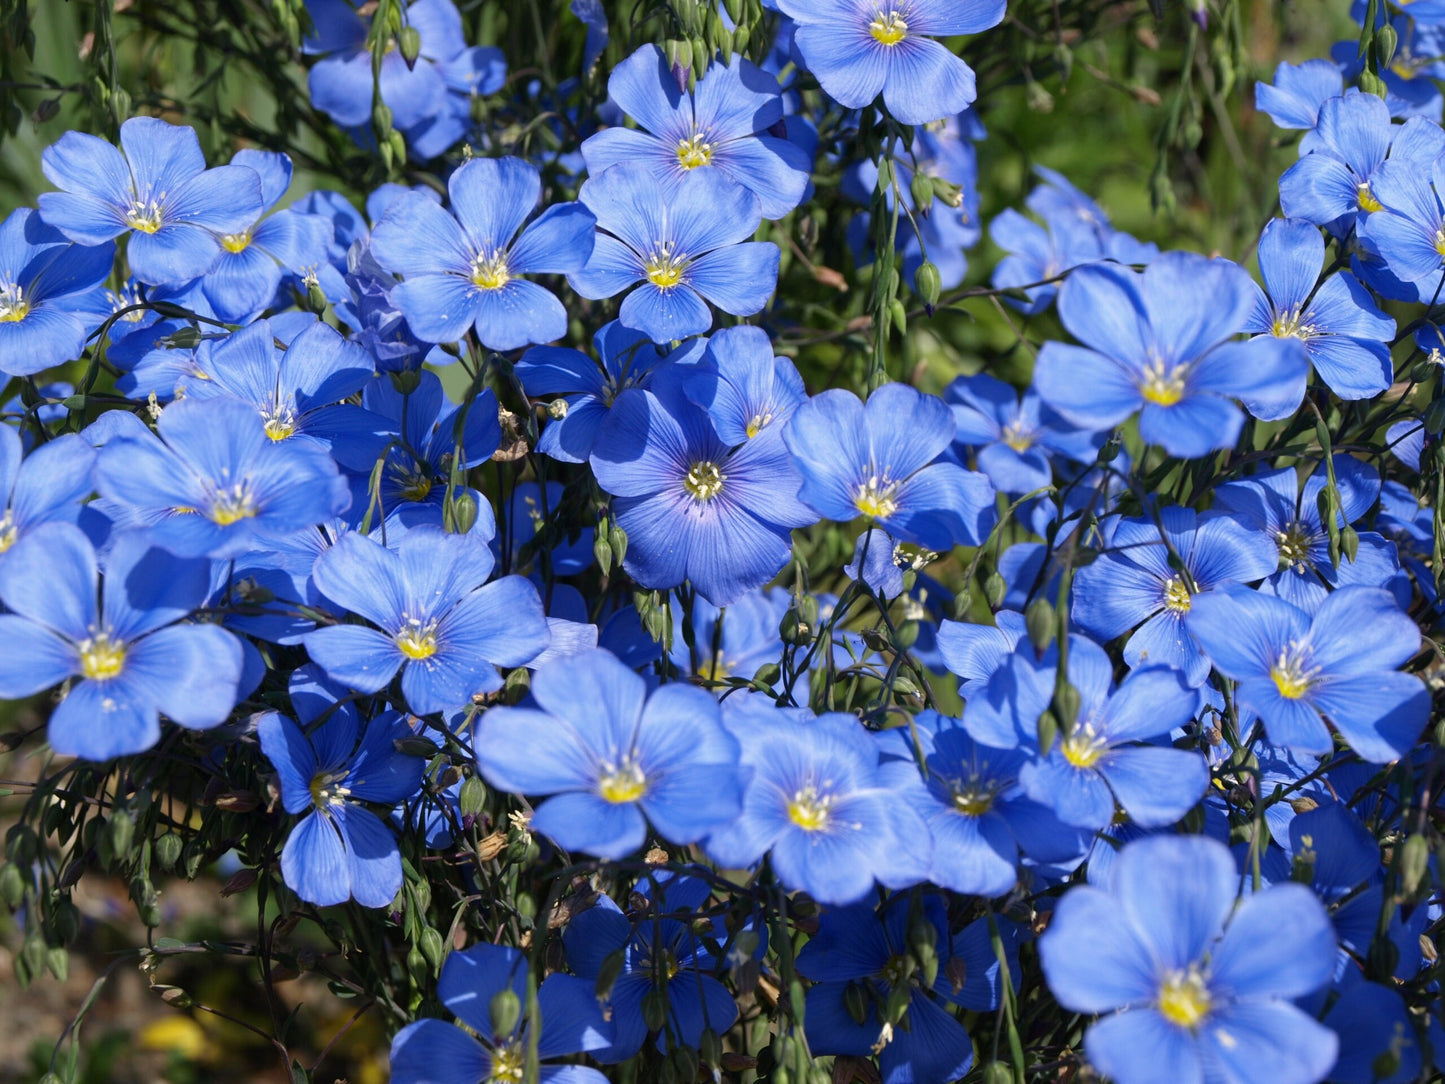 Perennial Flax/Blue Flax Flowers/Linum Perenne - 100 Seeds - GMO free